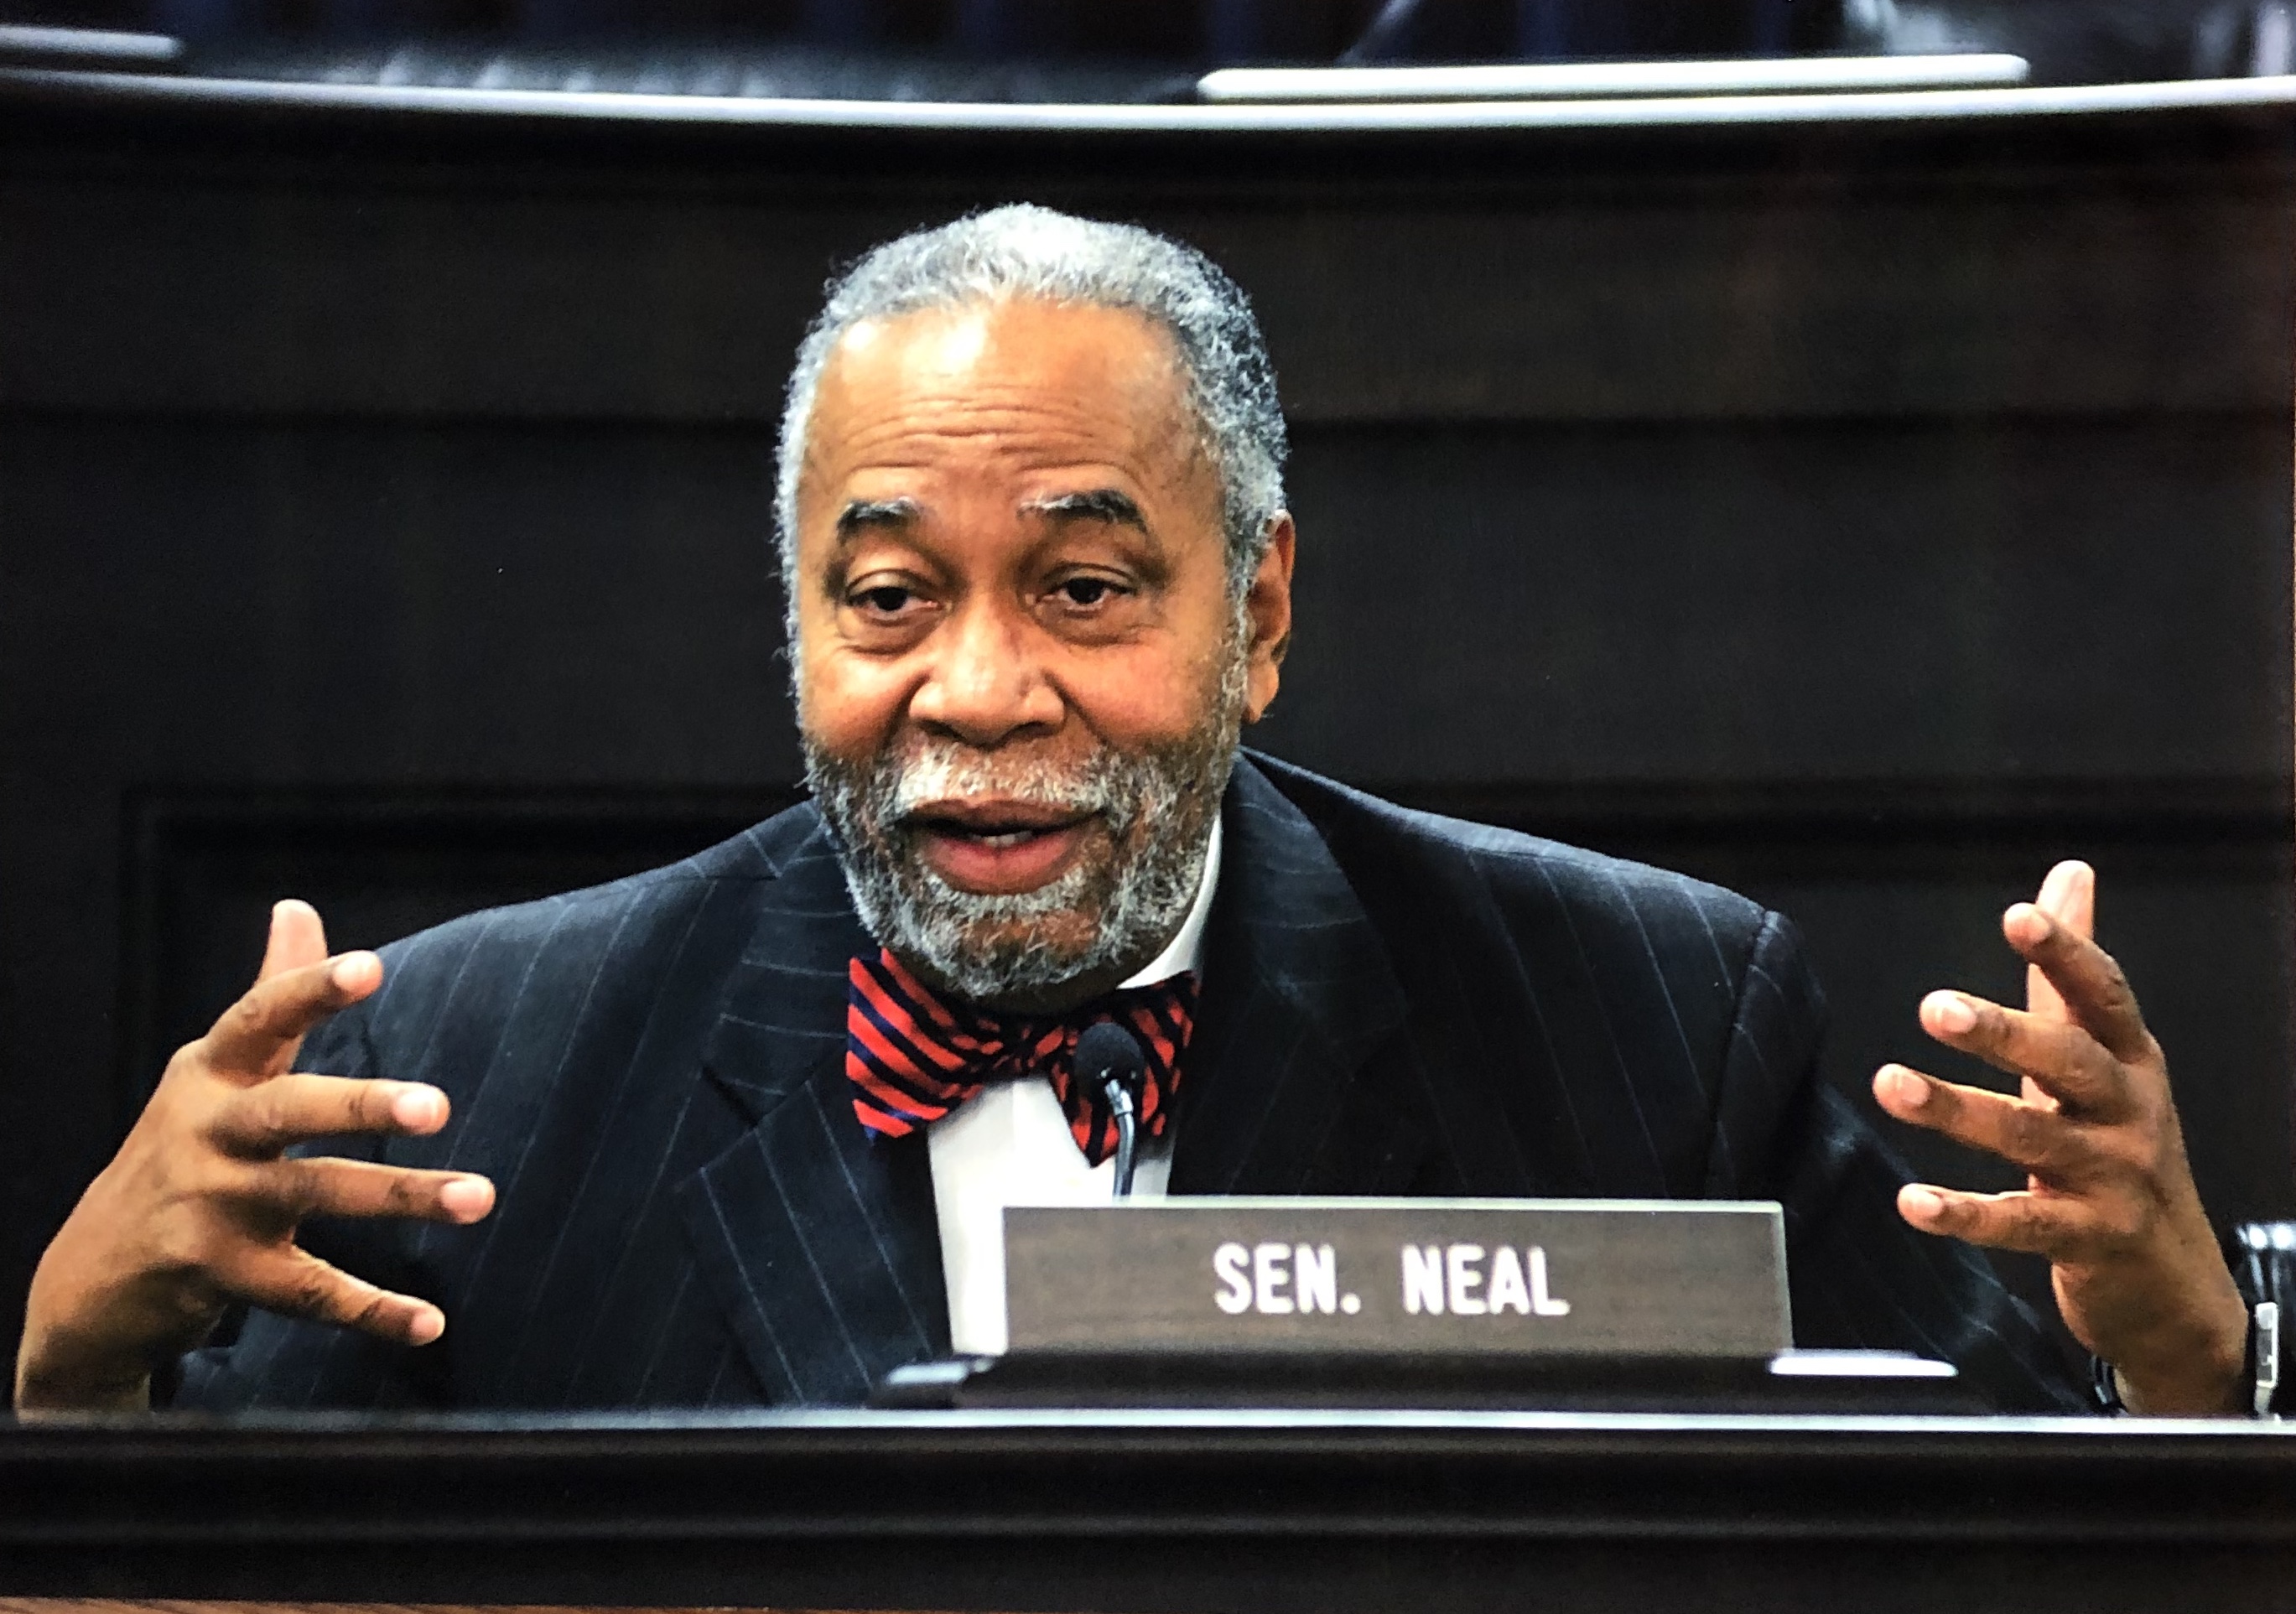 Gerald Neal speaking in the Senate